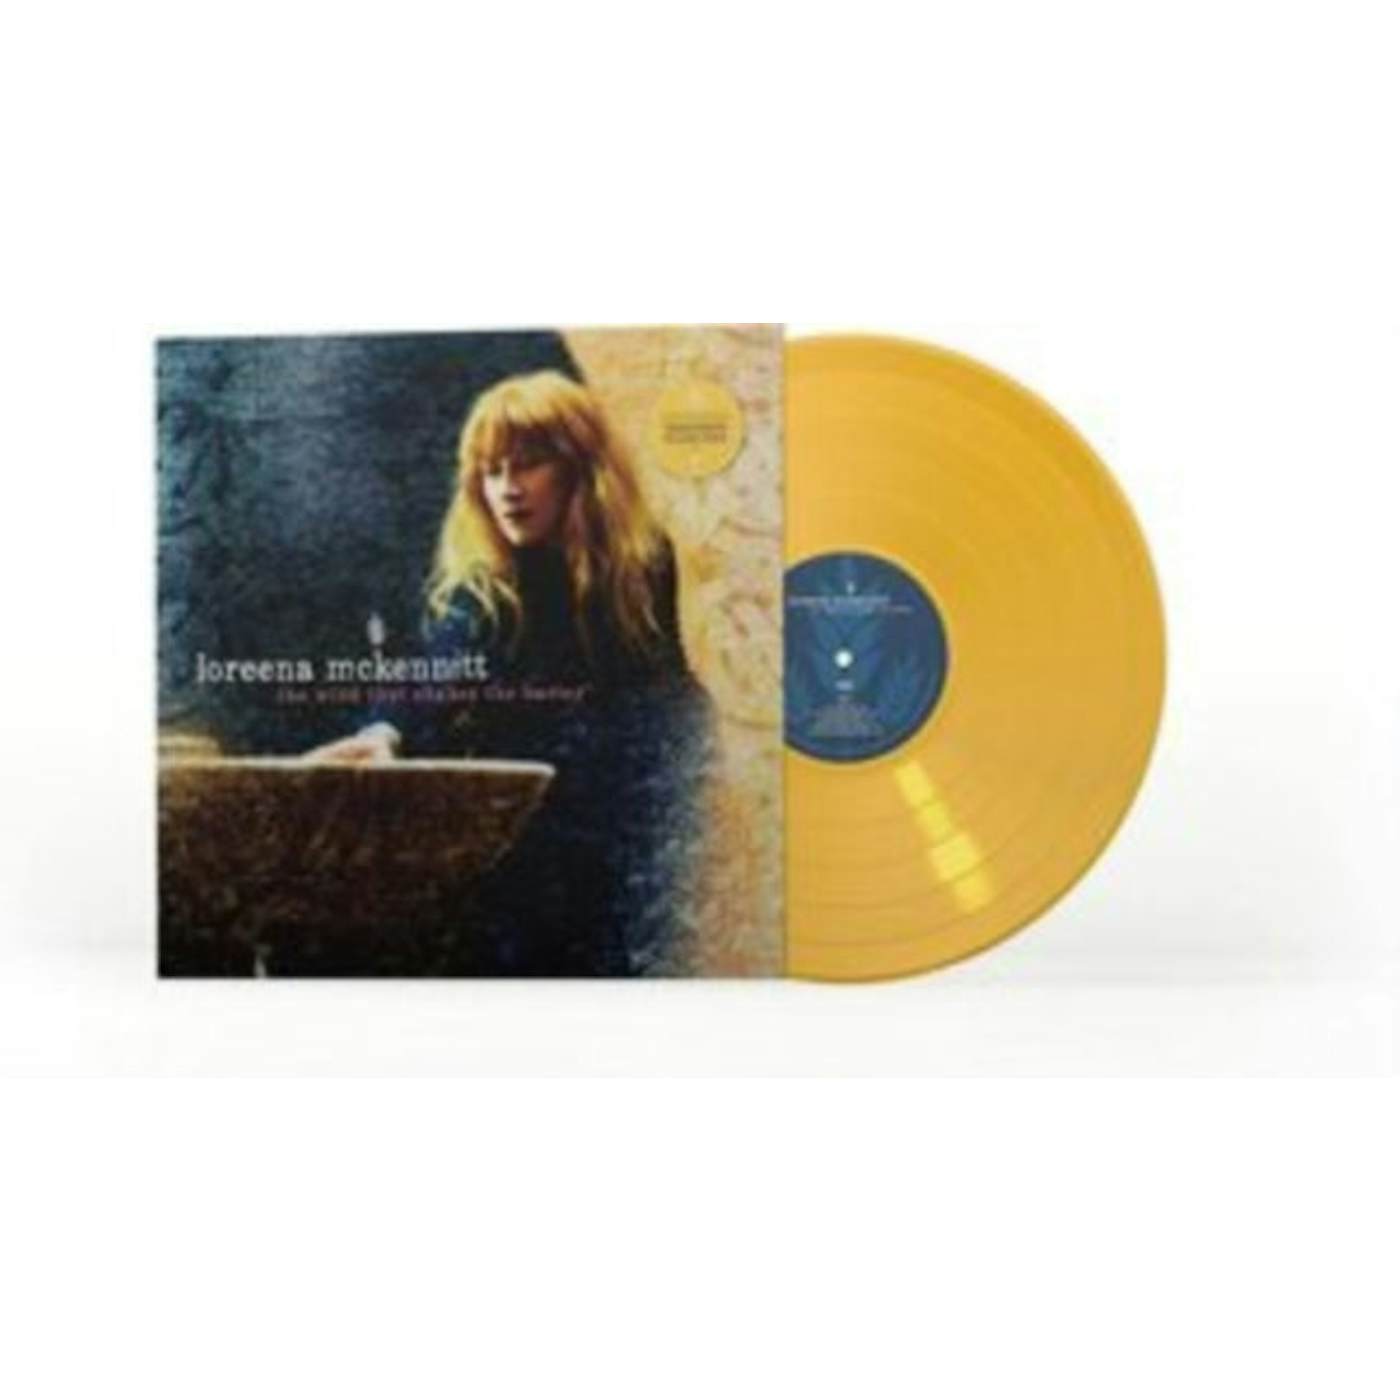 Loreena Mckennitt LP - The Wind That Shakes The Barley [Transparent Yellow Vinyl]